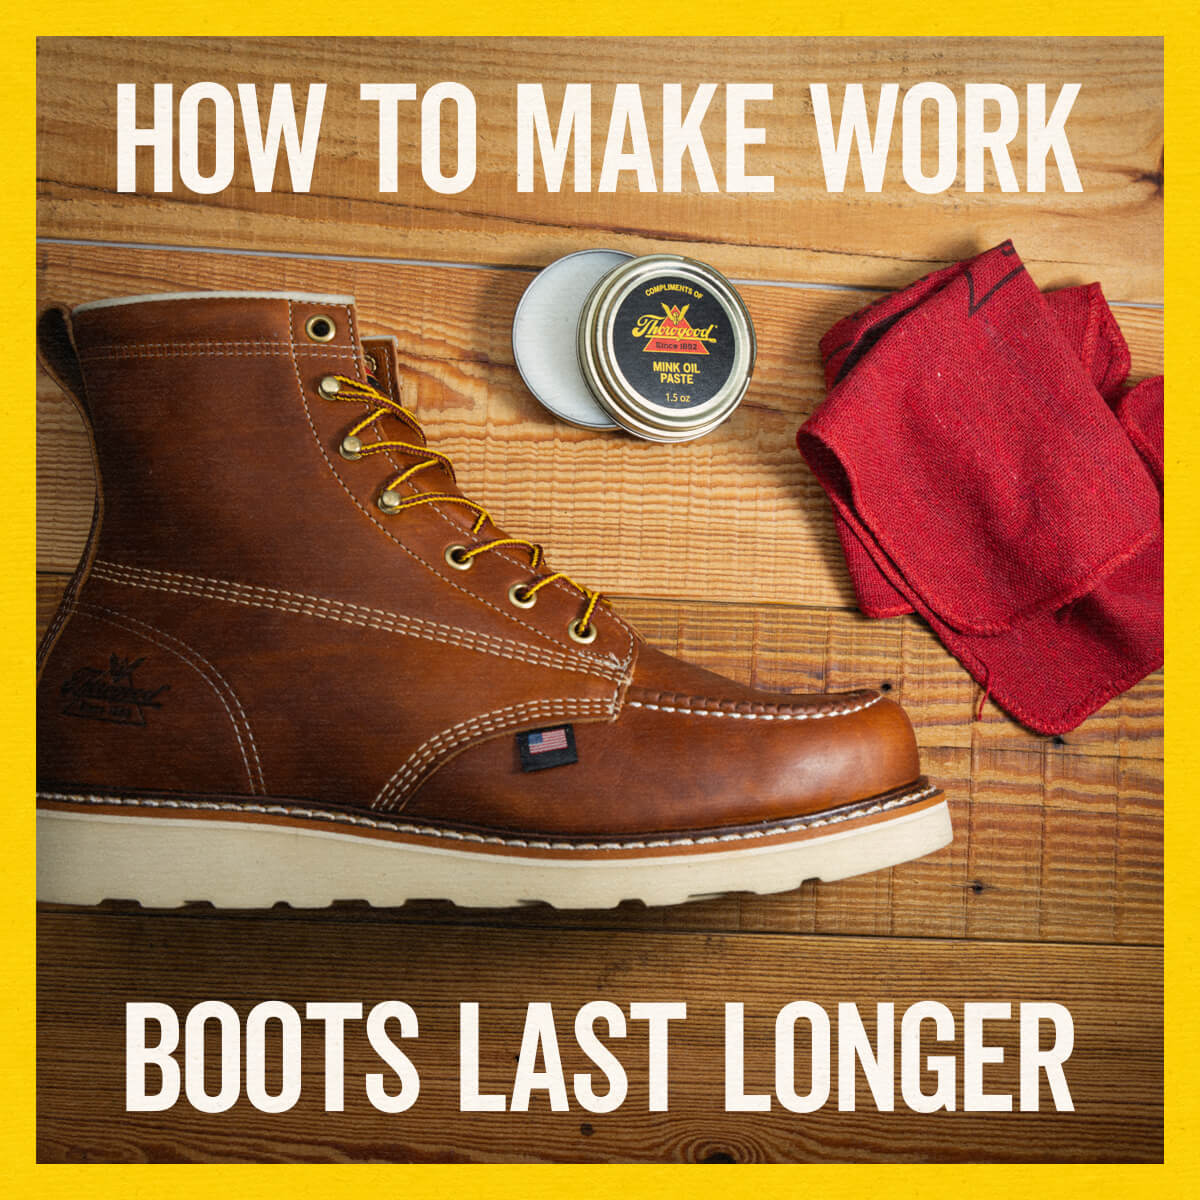 How to Make Work Boots Last Longer | Thorogood USA